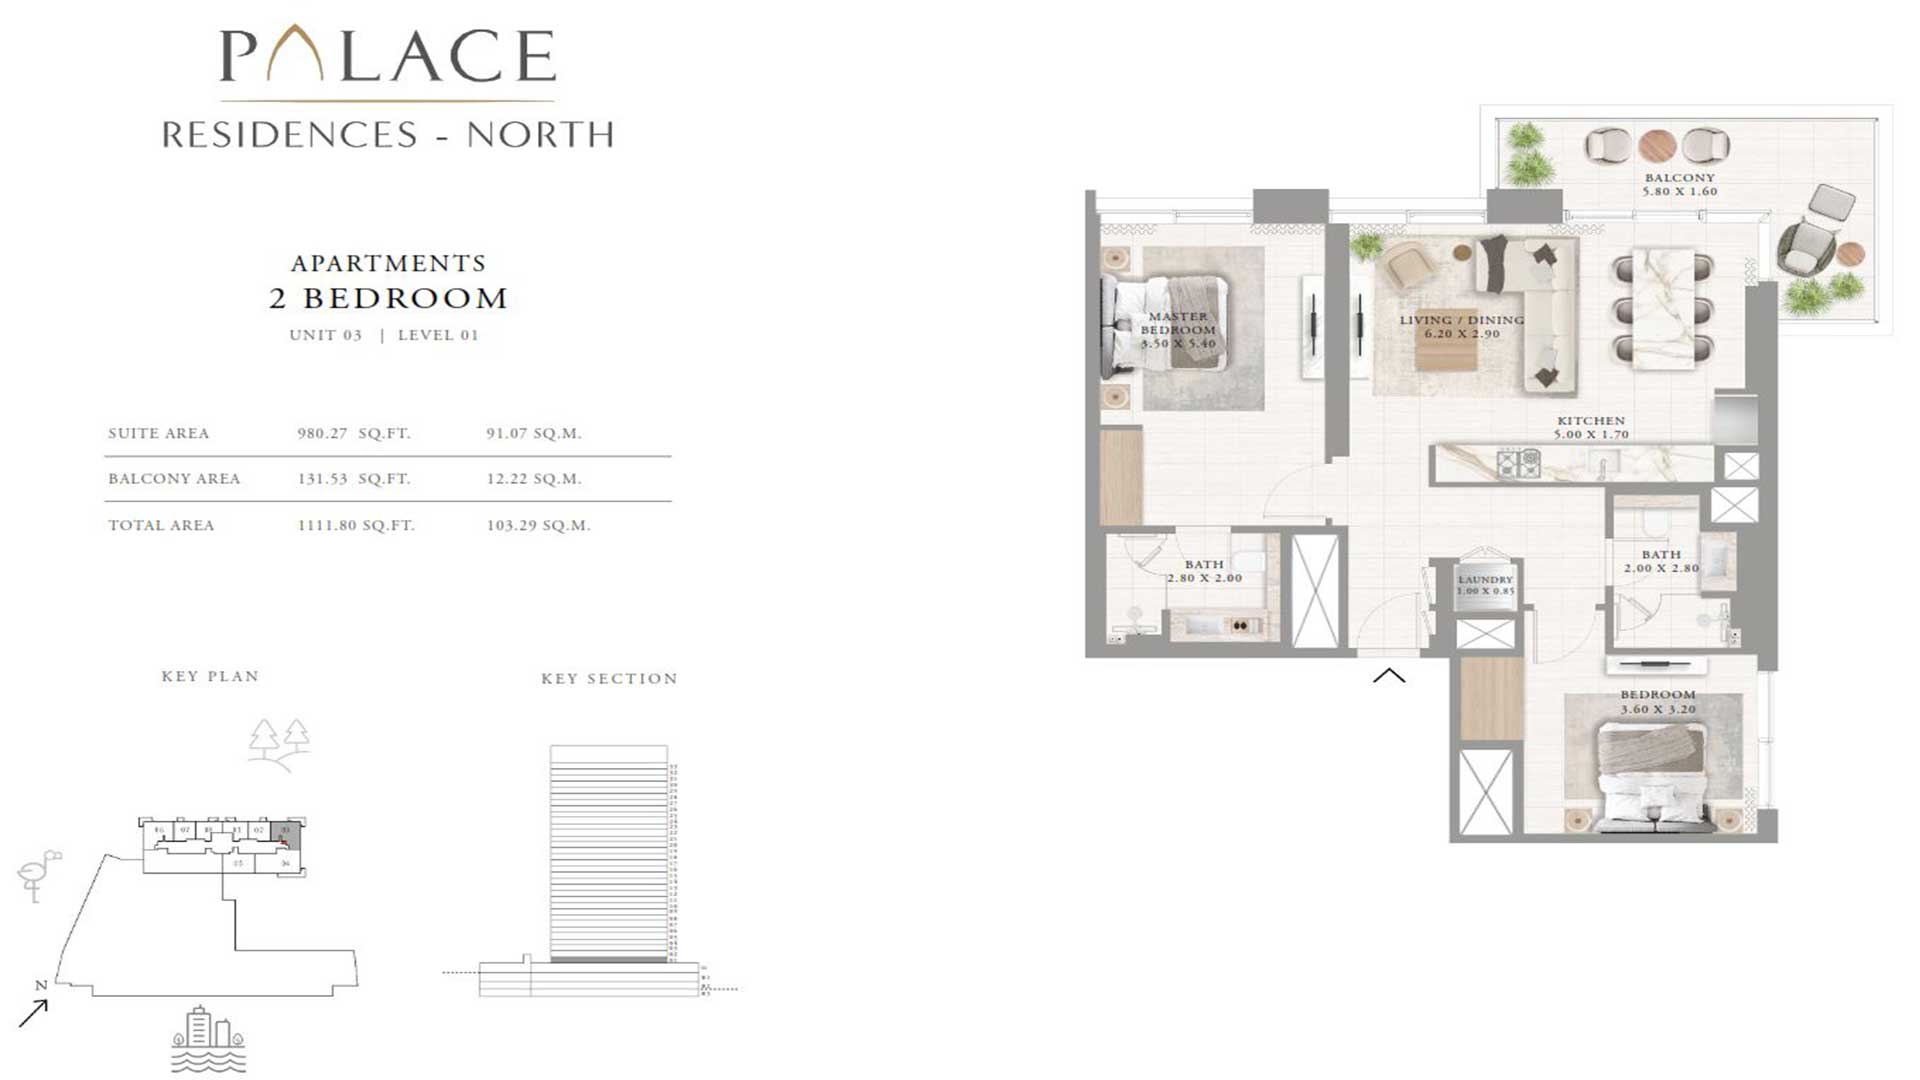 palace-residences-north-2-bedroom-floor-plan